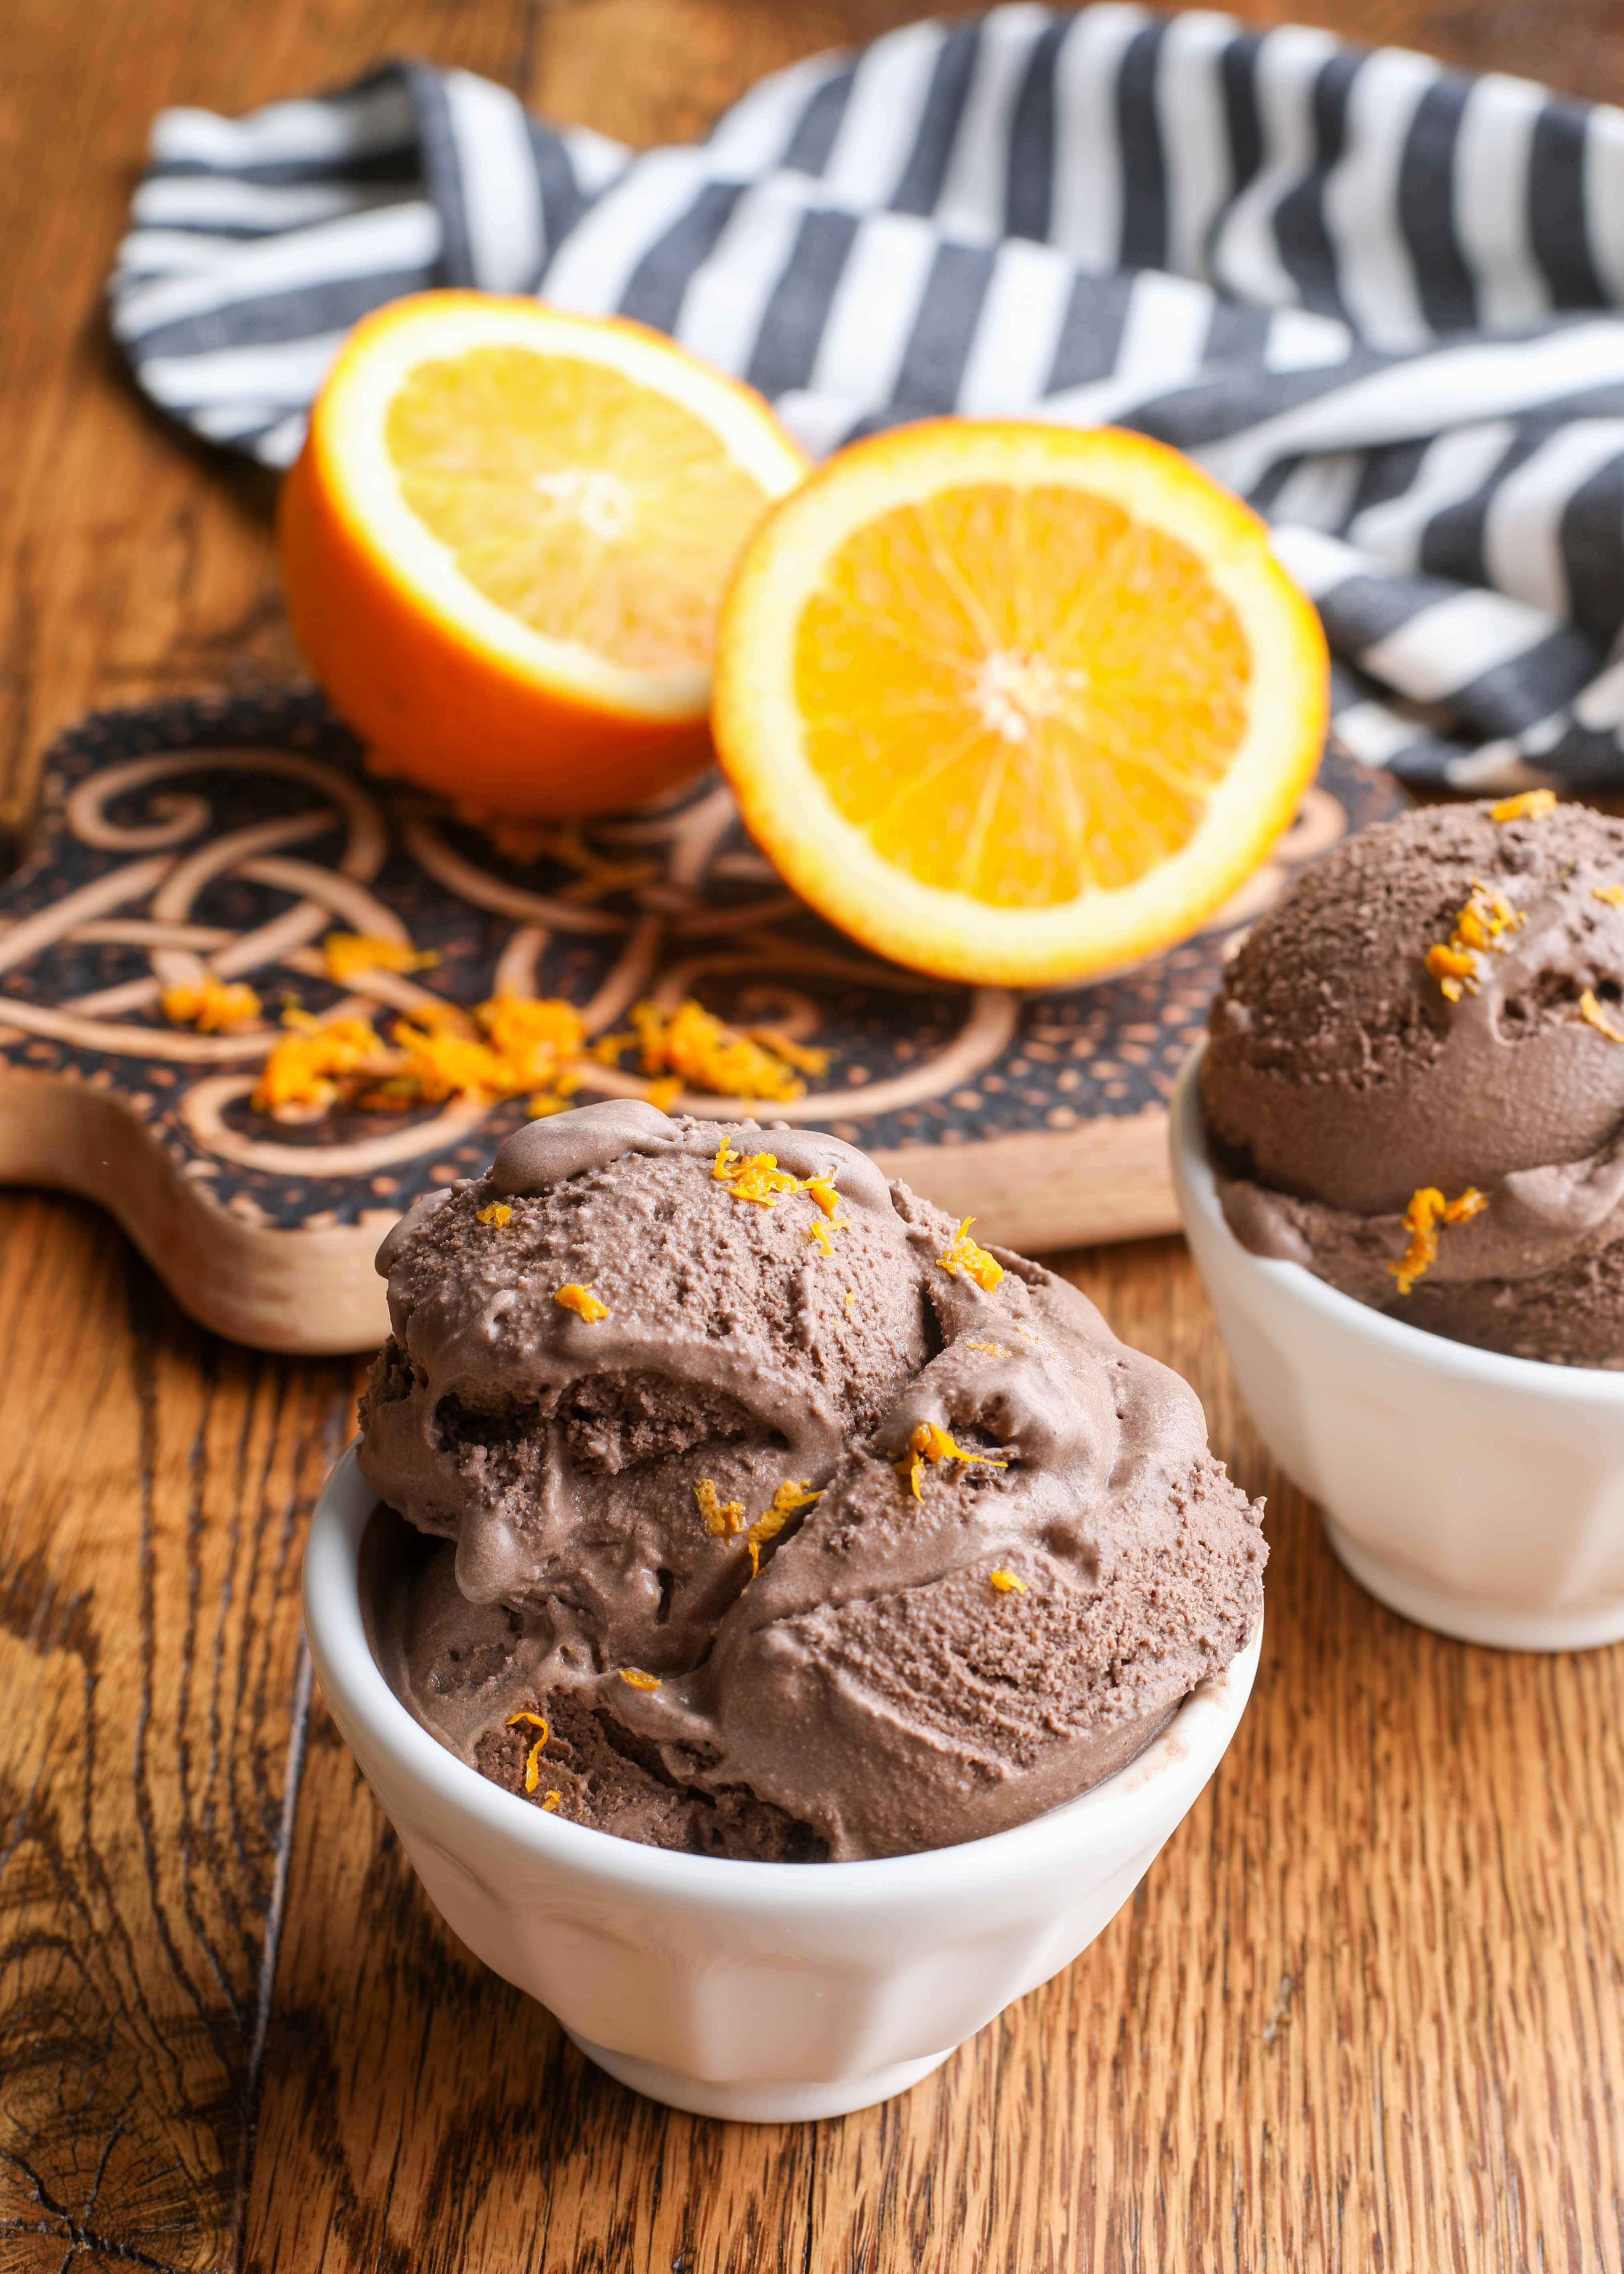 Ninja Creami Orange Sherbet - I Dream of Ice Cream